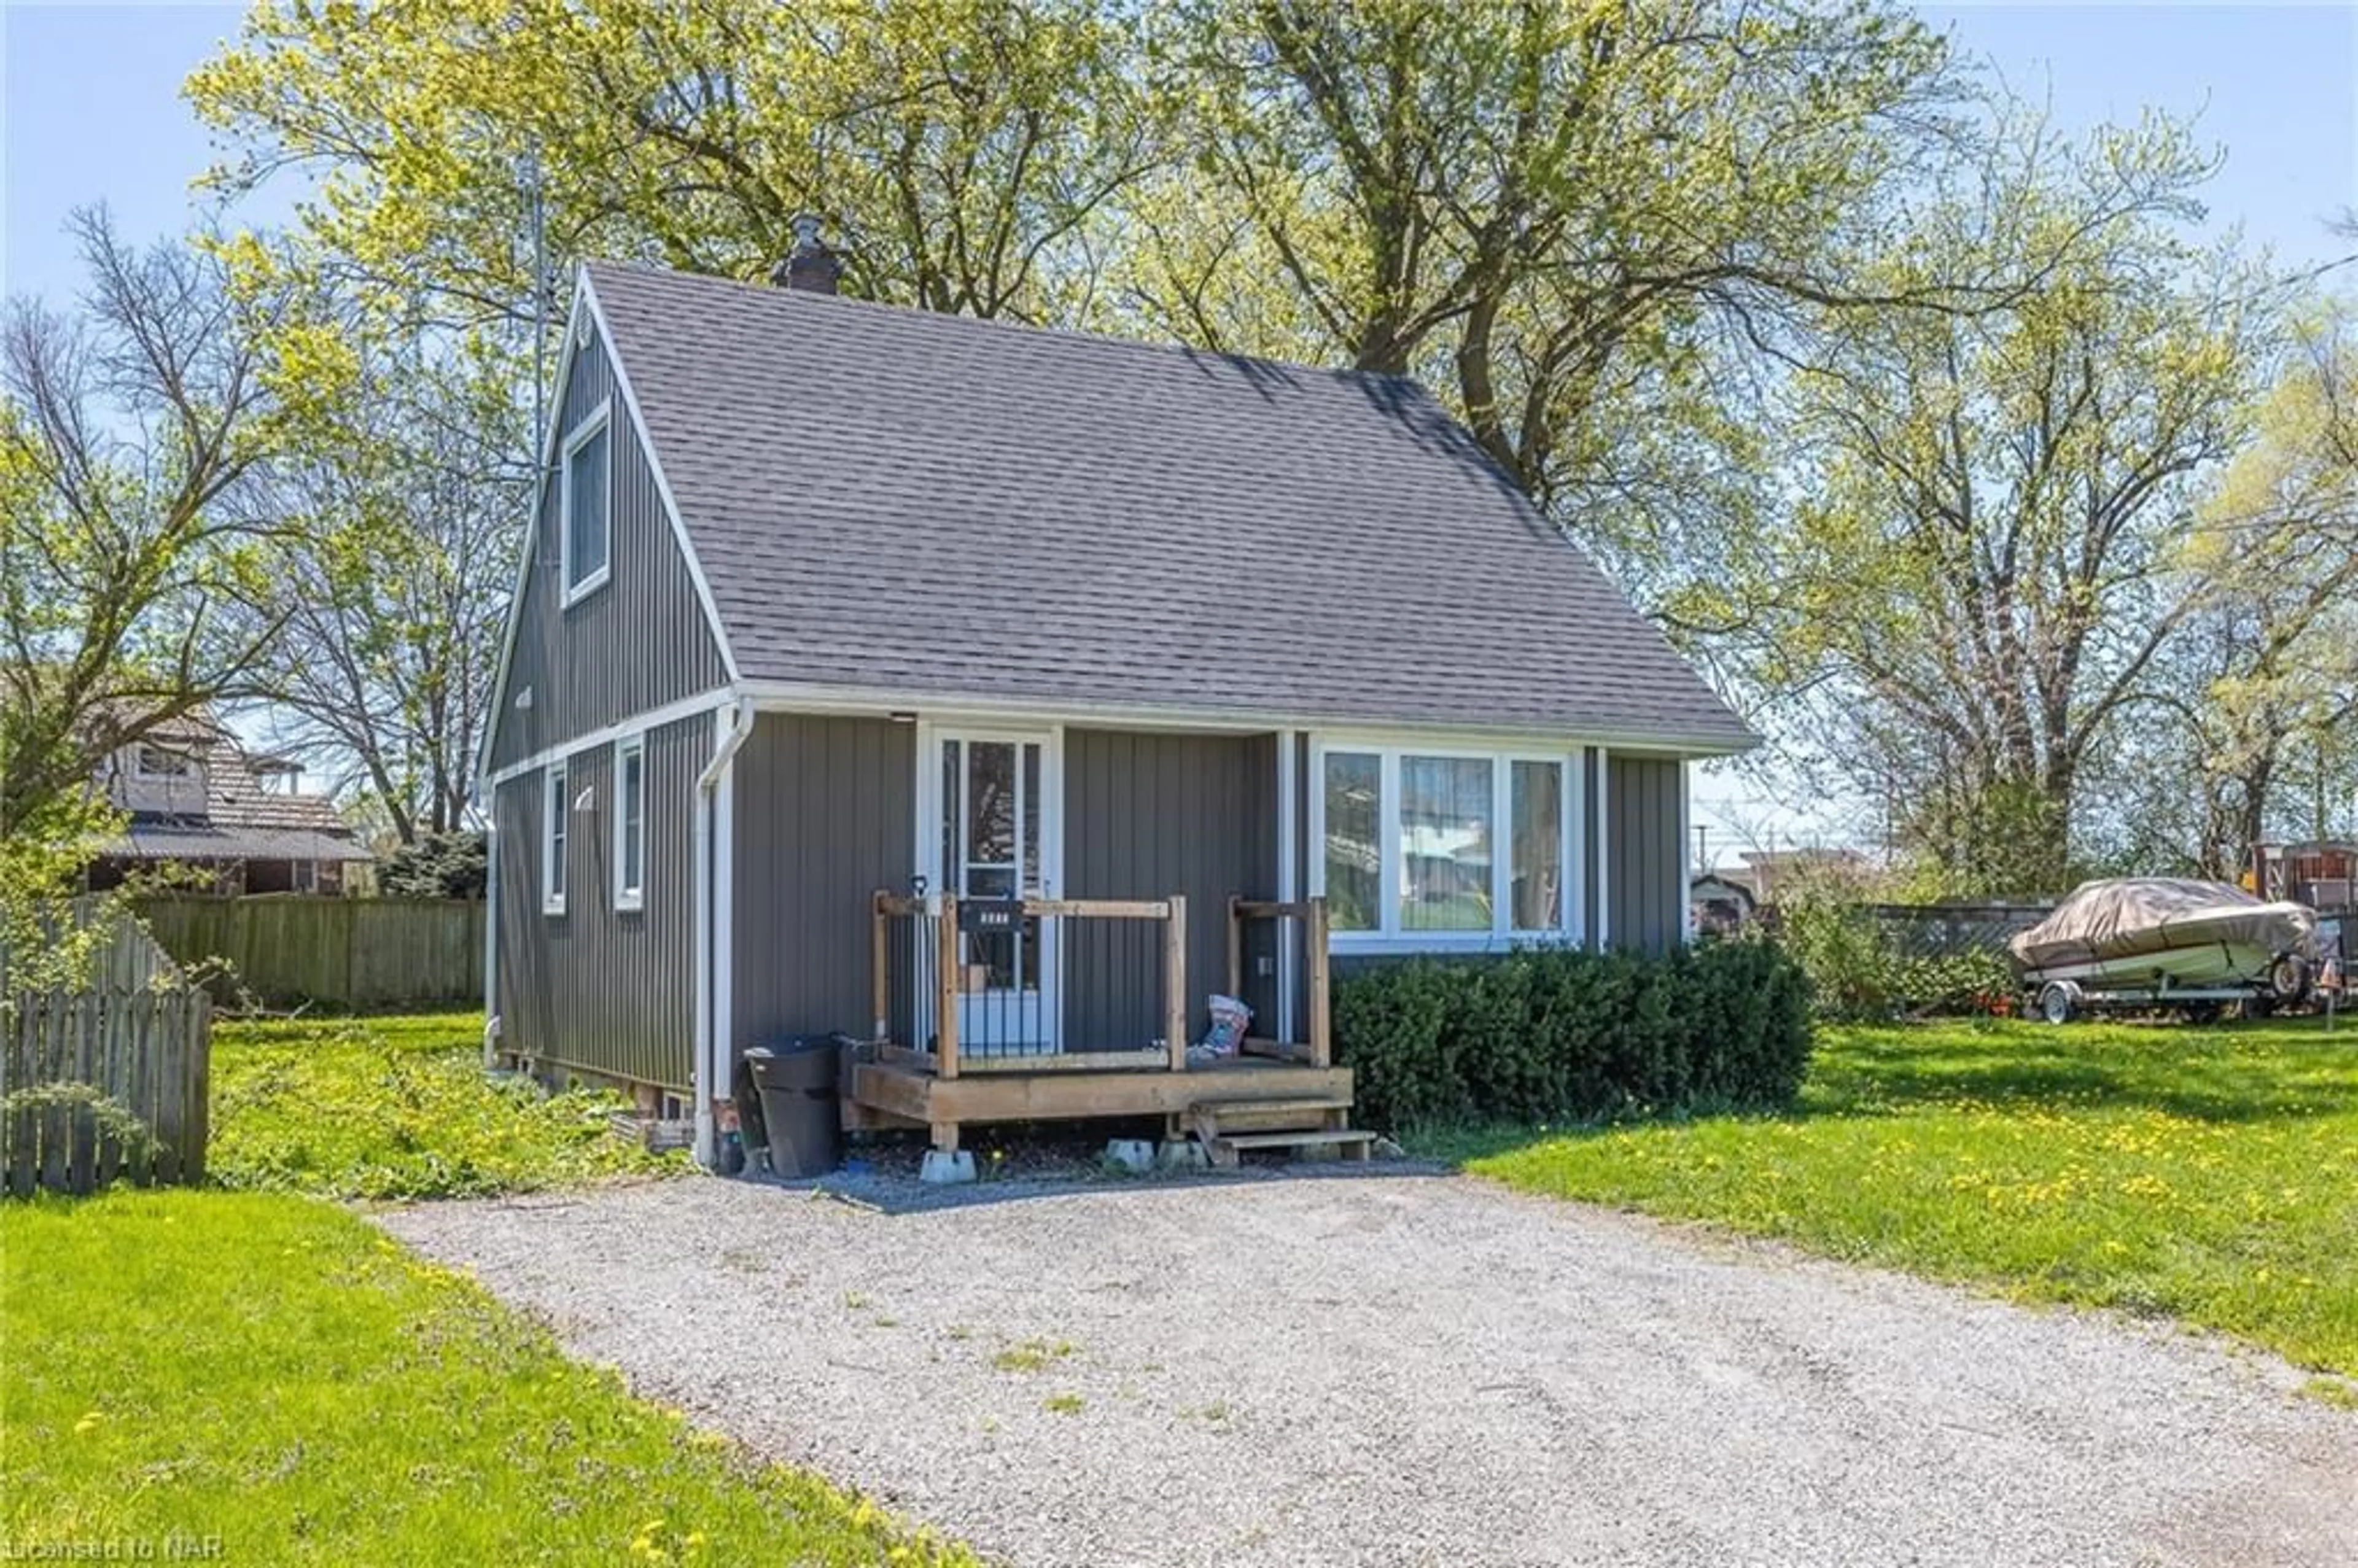 Cottage for 5412 Houck Dr, Niagara Falls Ontario L2E 1S1